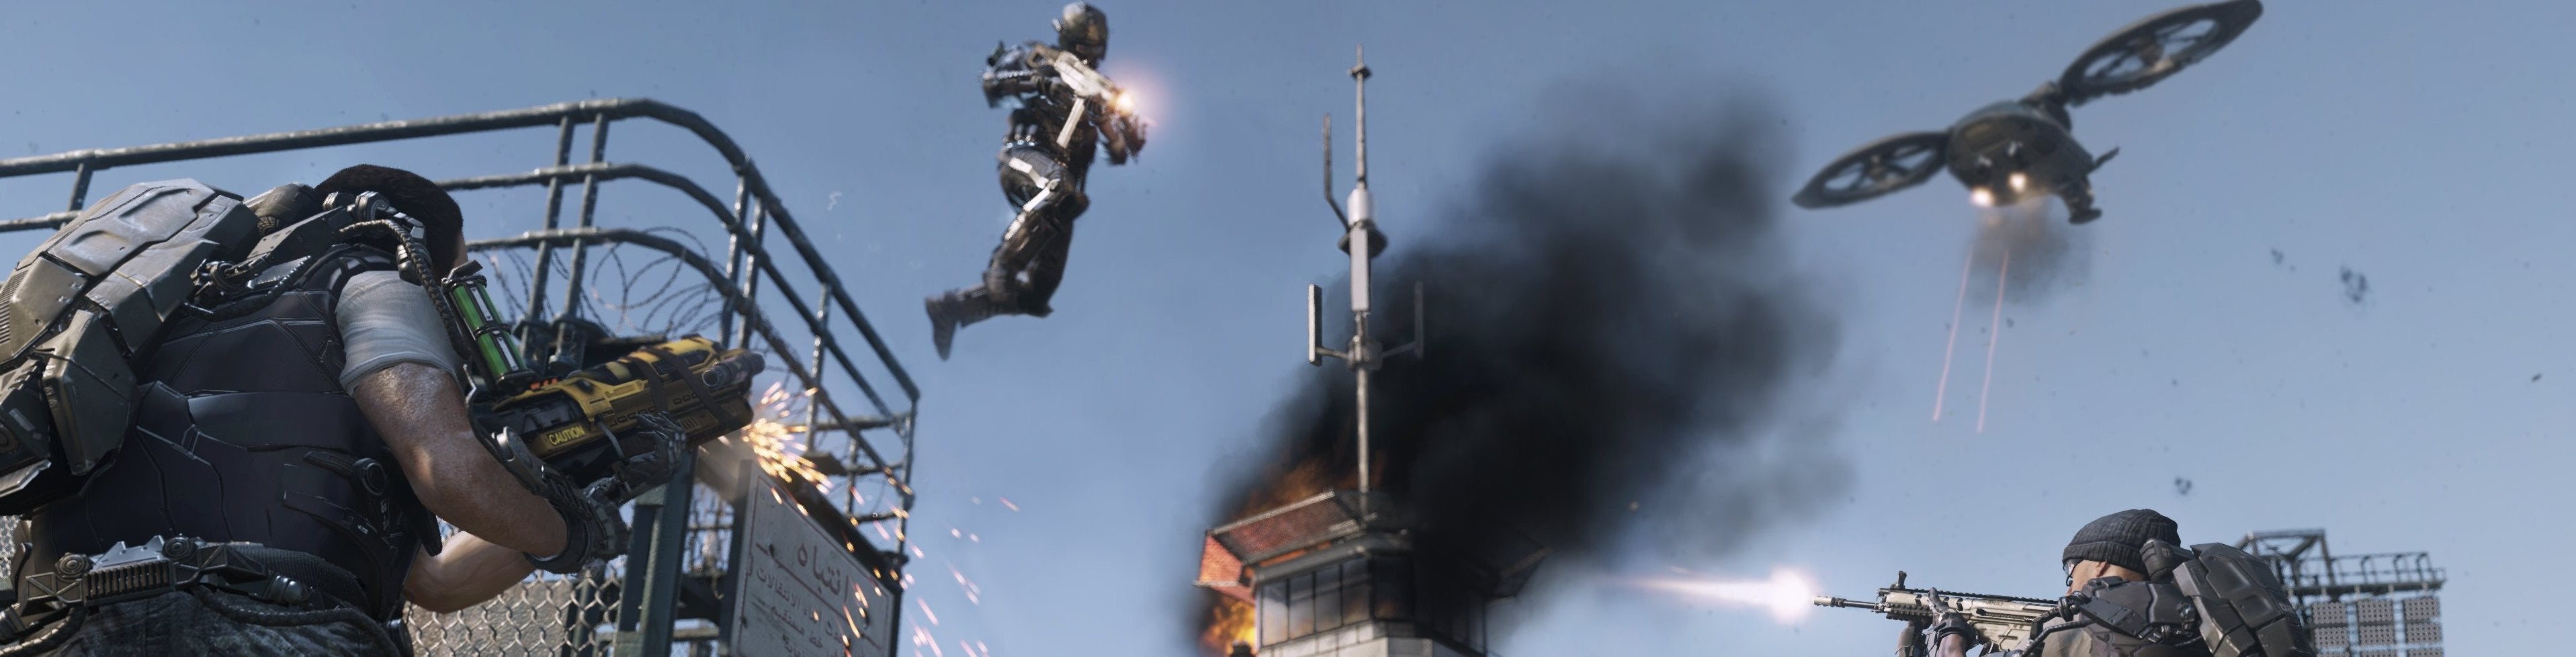 Afbeeldingen van Call of Duty: Advanced Warfare companion-app aangekondigd